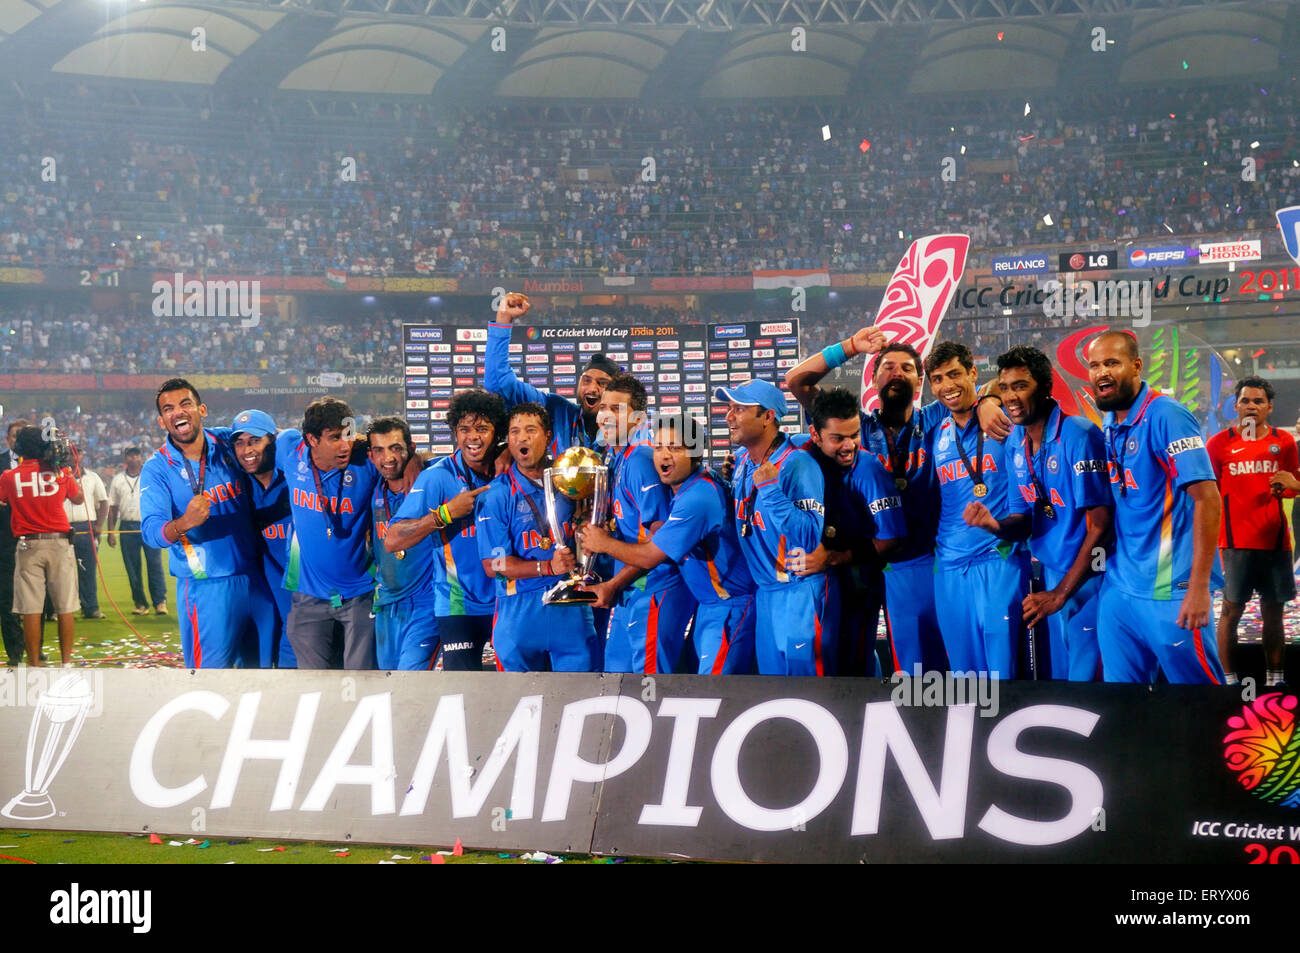 Cricketers feiern Trophäe gegen Sri Lanka ICC Cricket World Cup 2011 Finale Wankhede Stadium Mumbai Indien Stockfoto